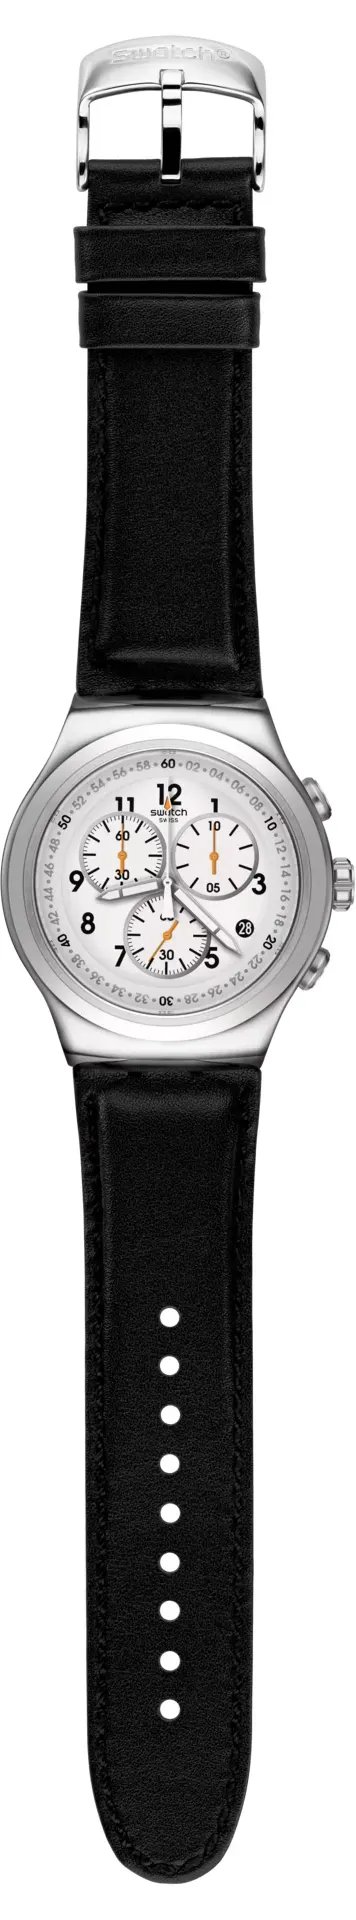 Swatch Men's Watch, Analog, Leather Strap, Black, YOS451